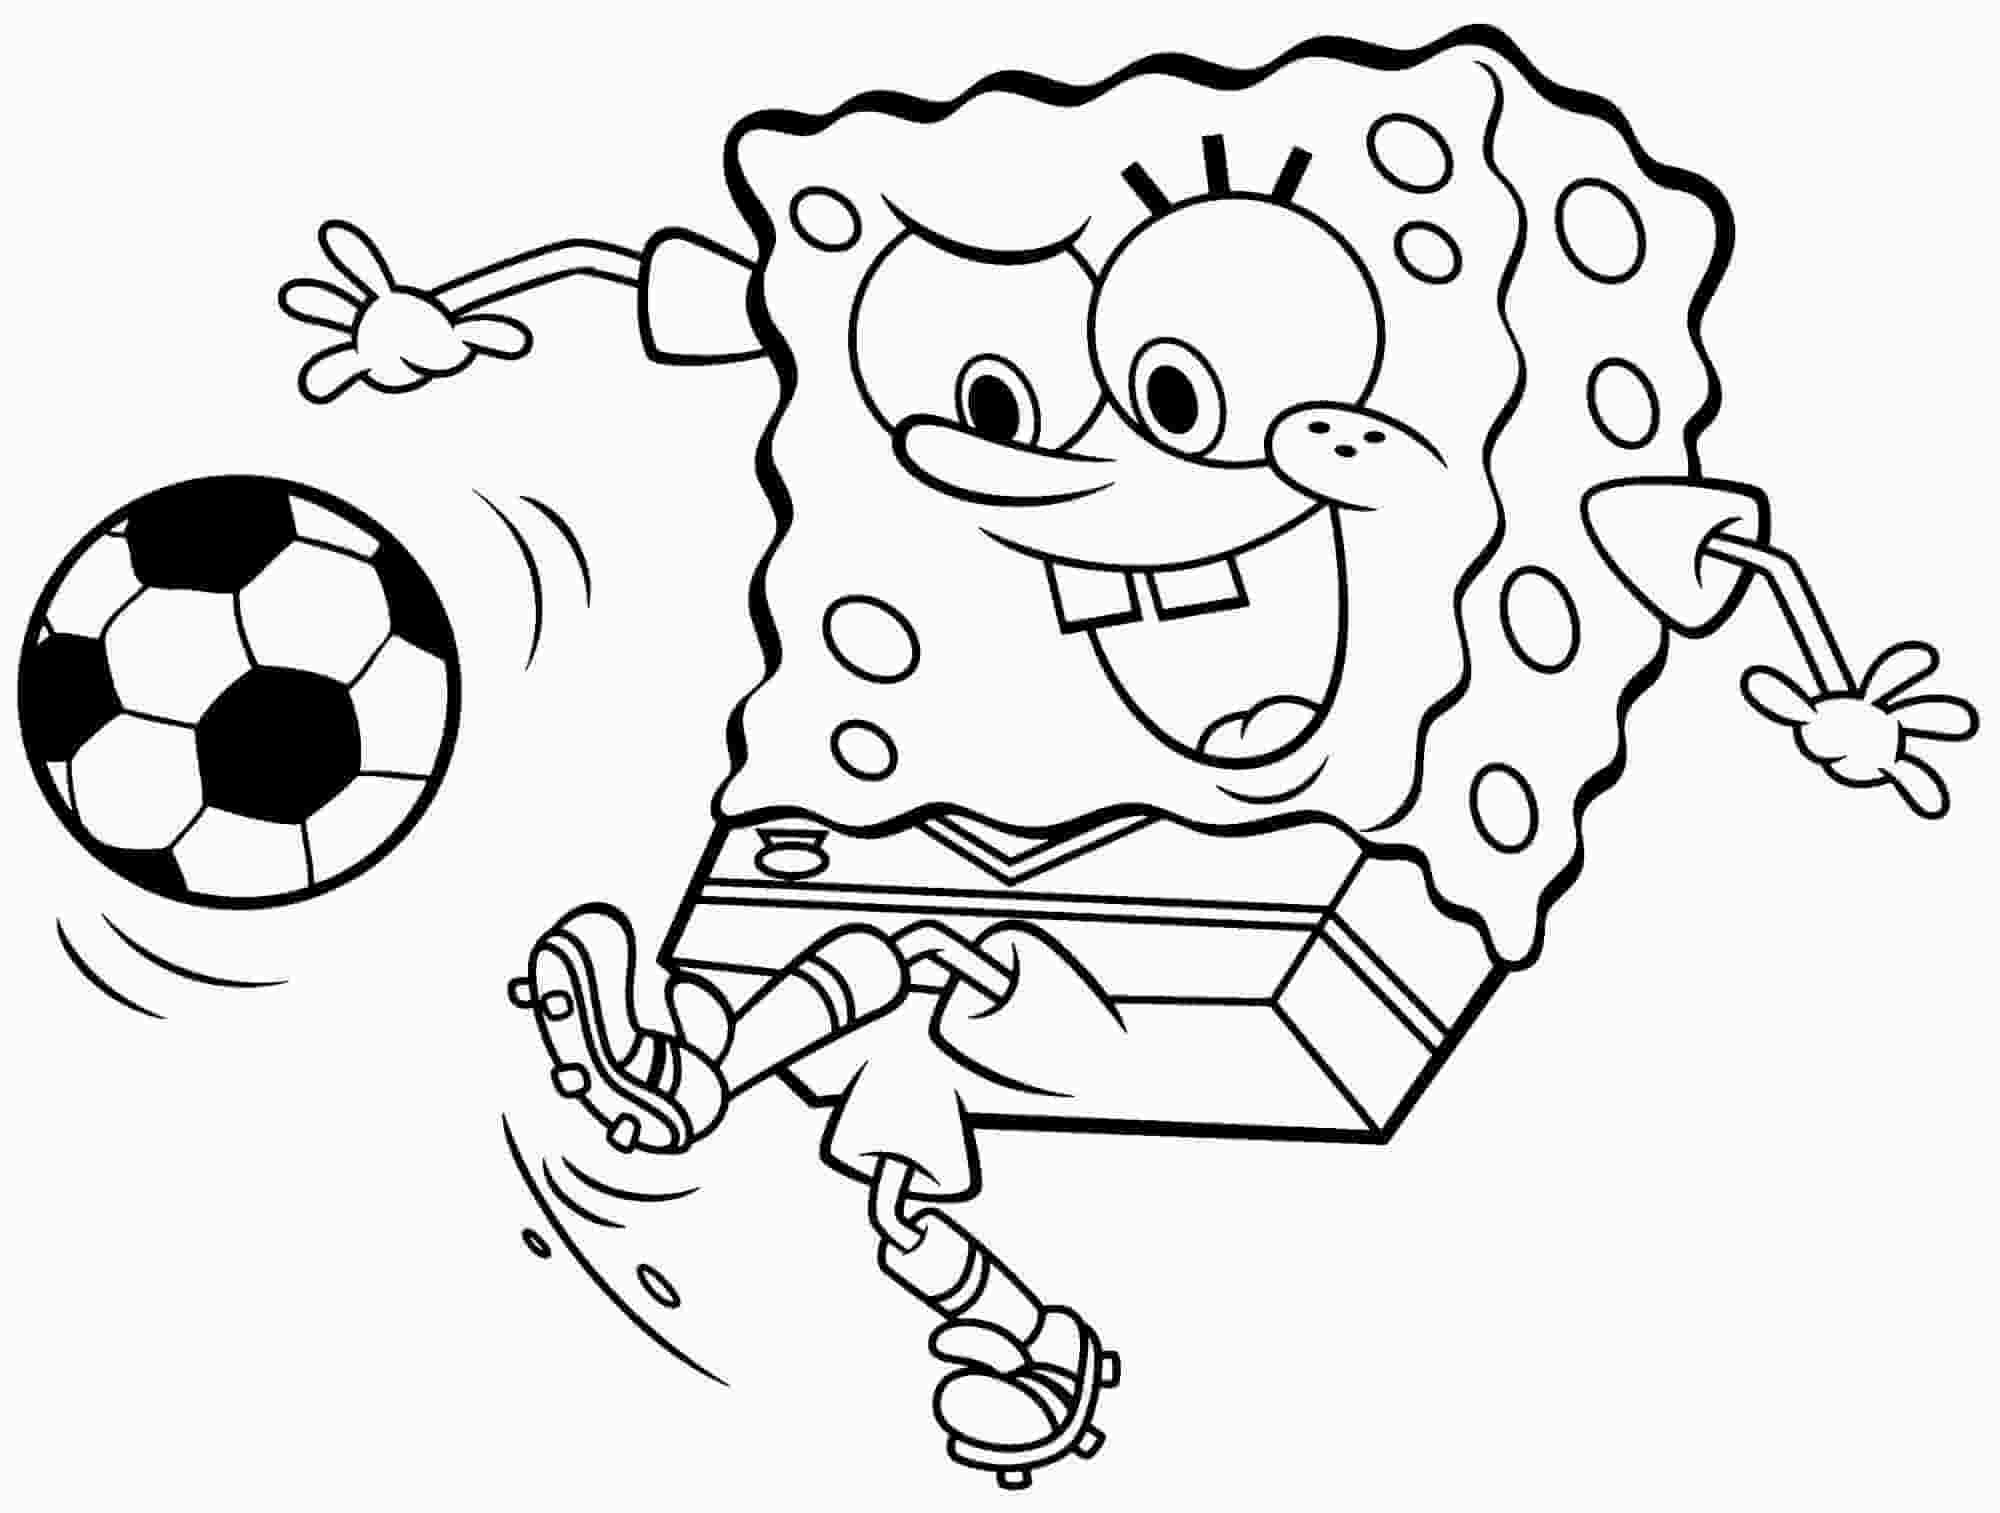 Soccer Spongebob Coloring Page